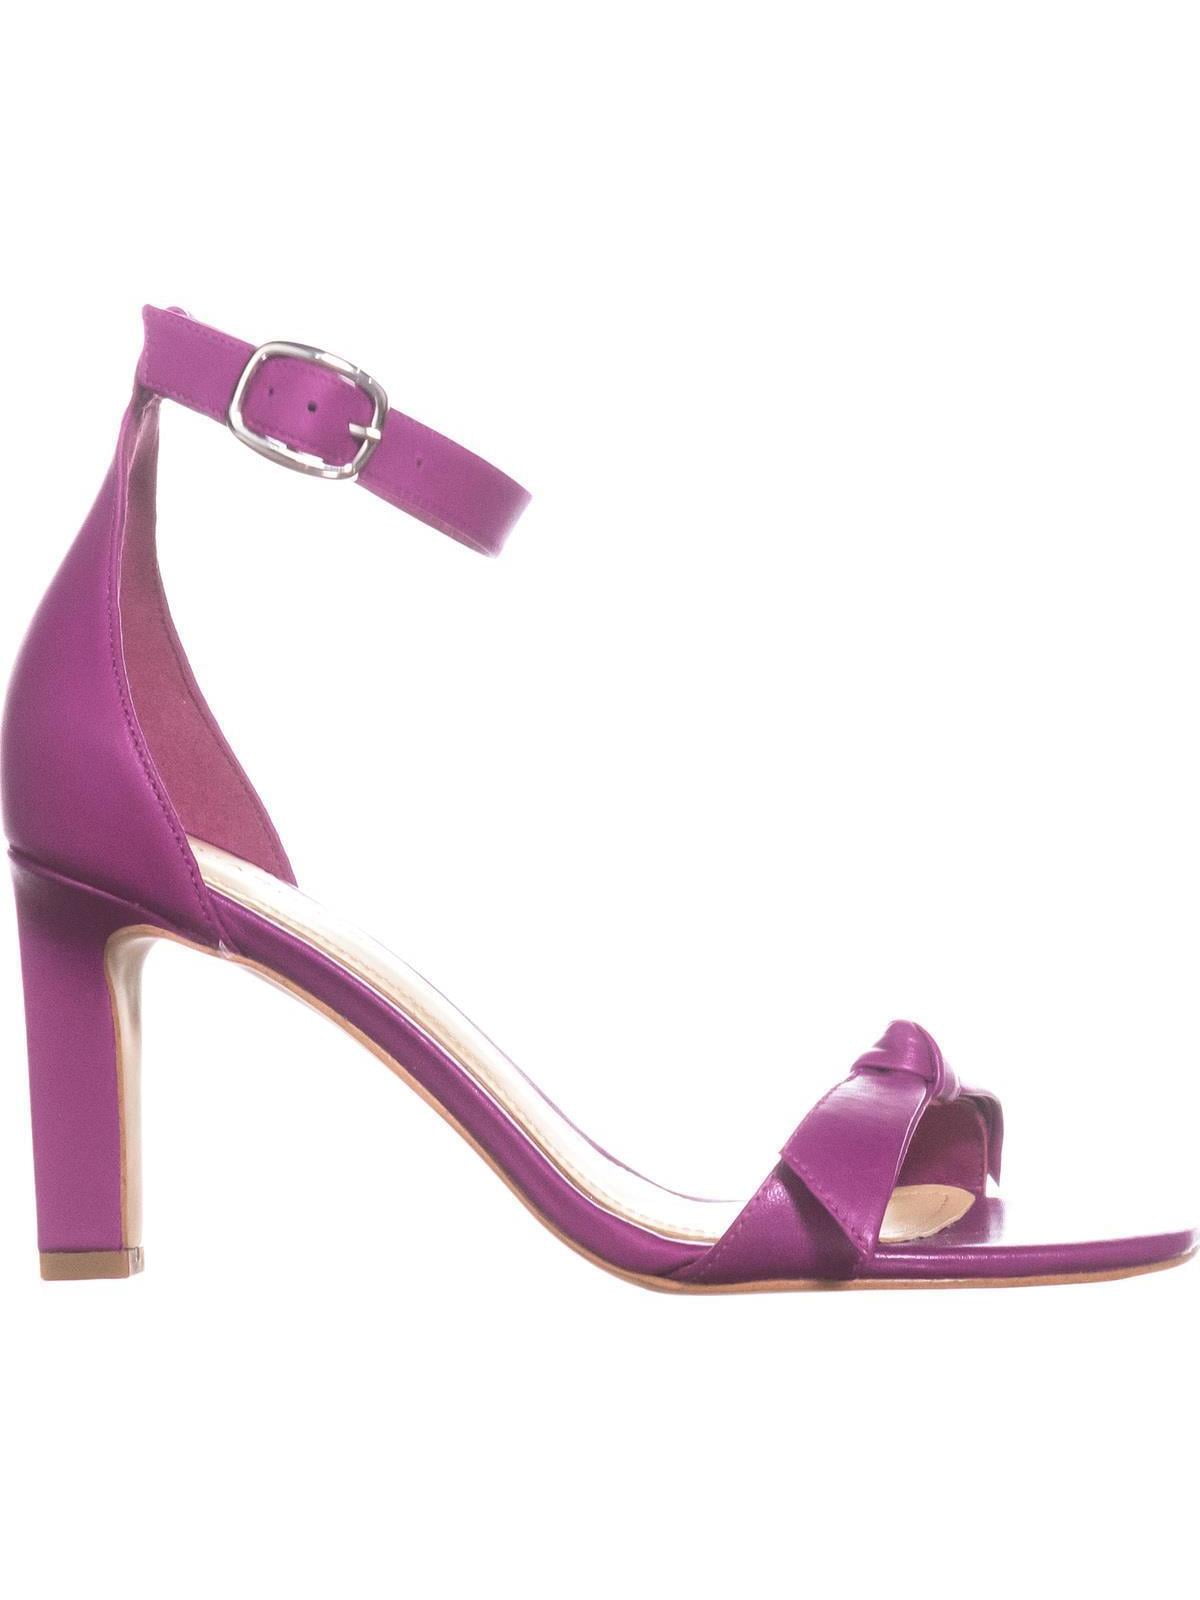 pink heels canada